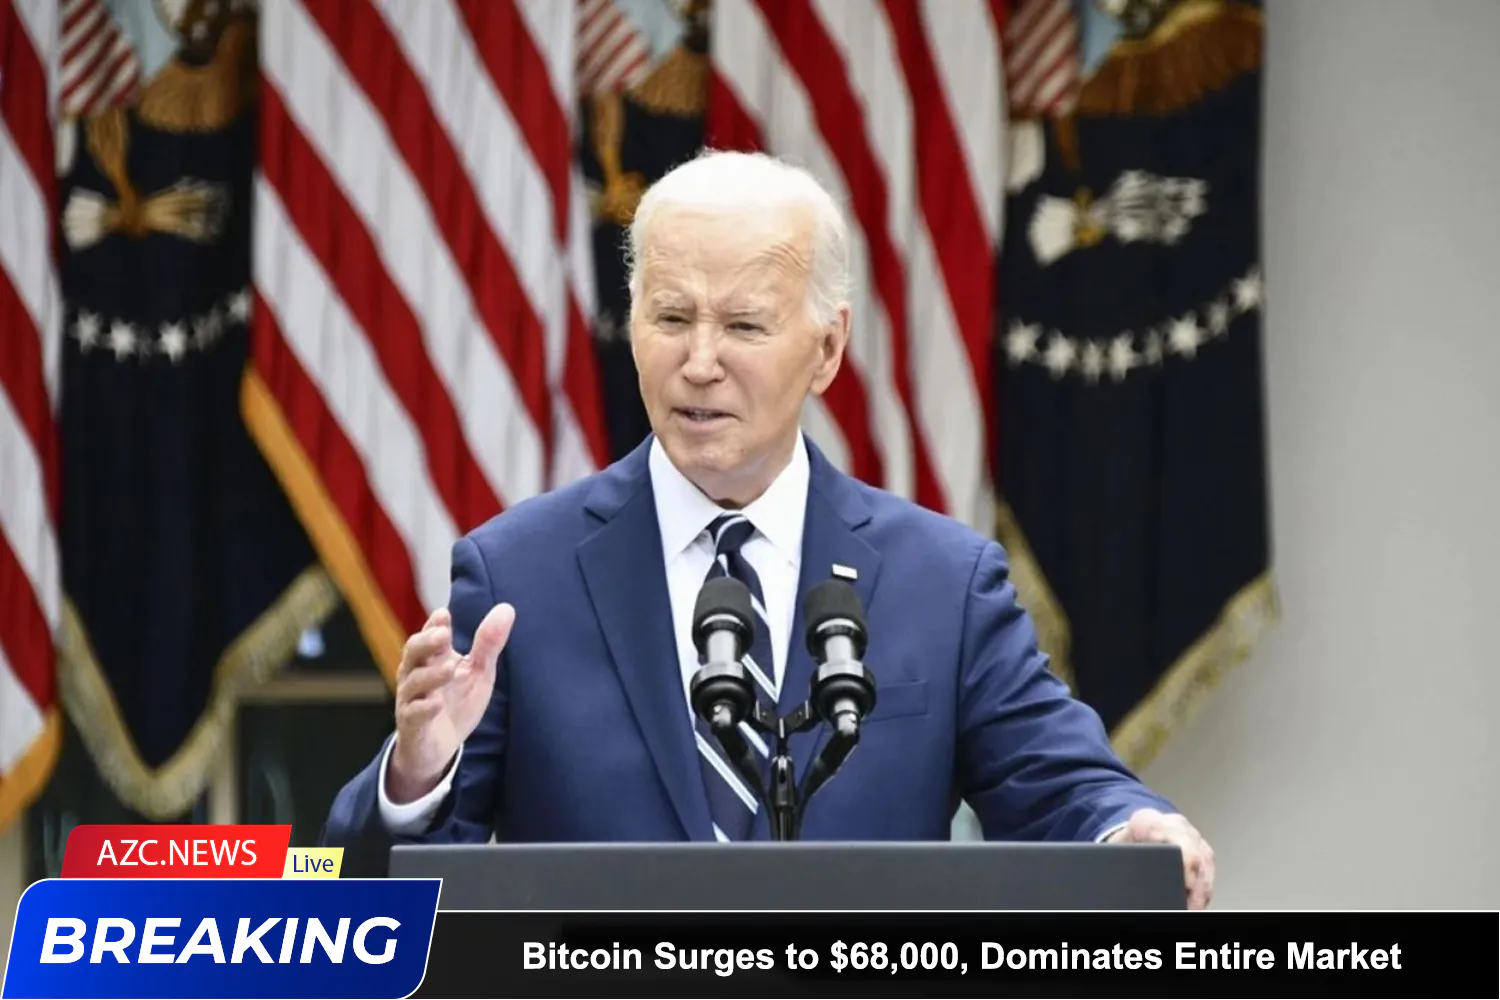 Azcnews Joe Biden Withdraws From U.s. Presidential Race